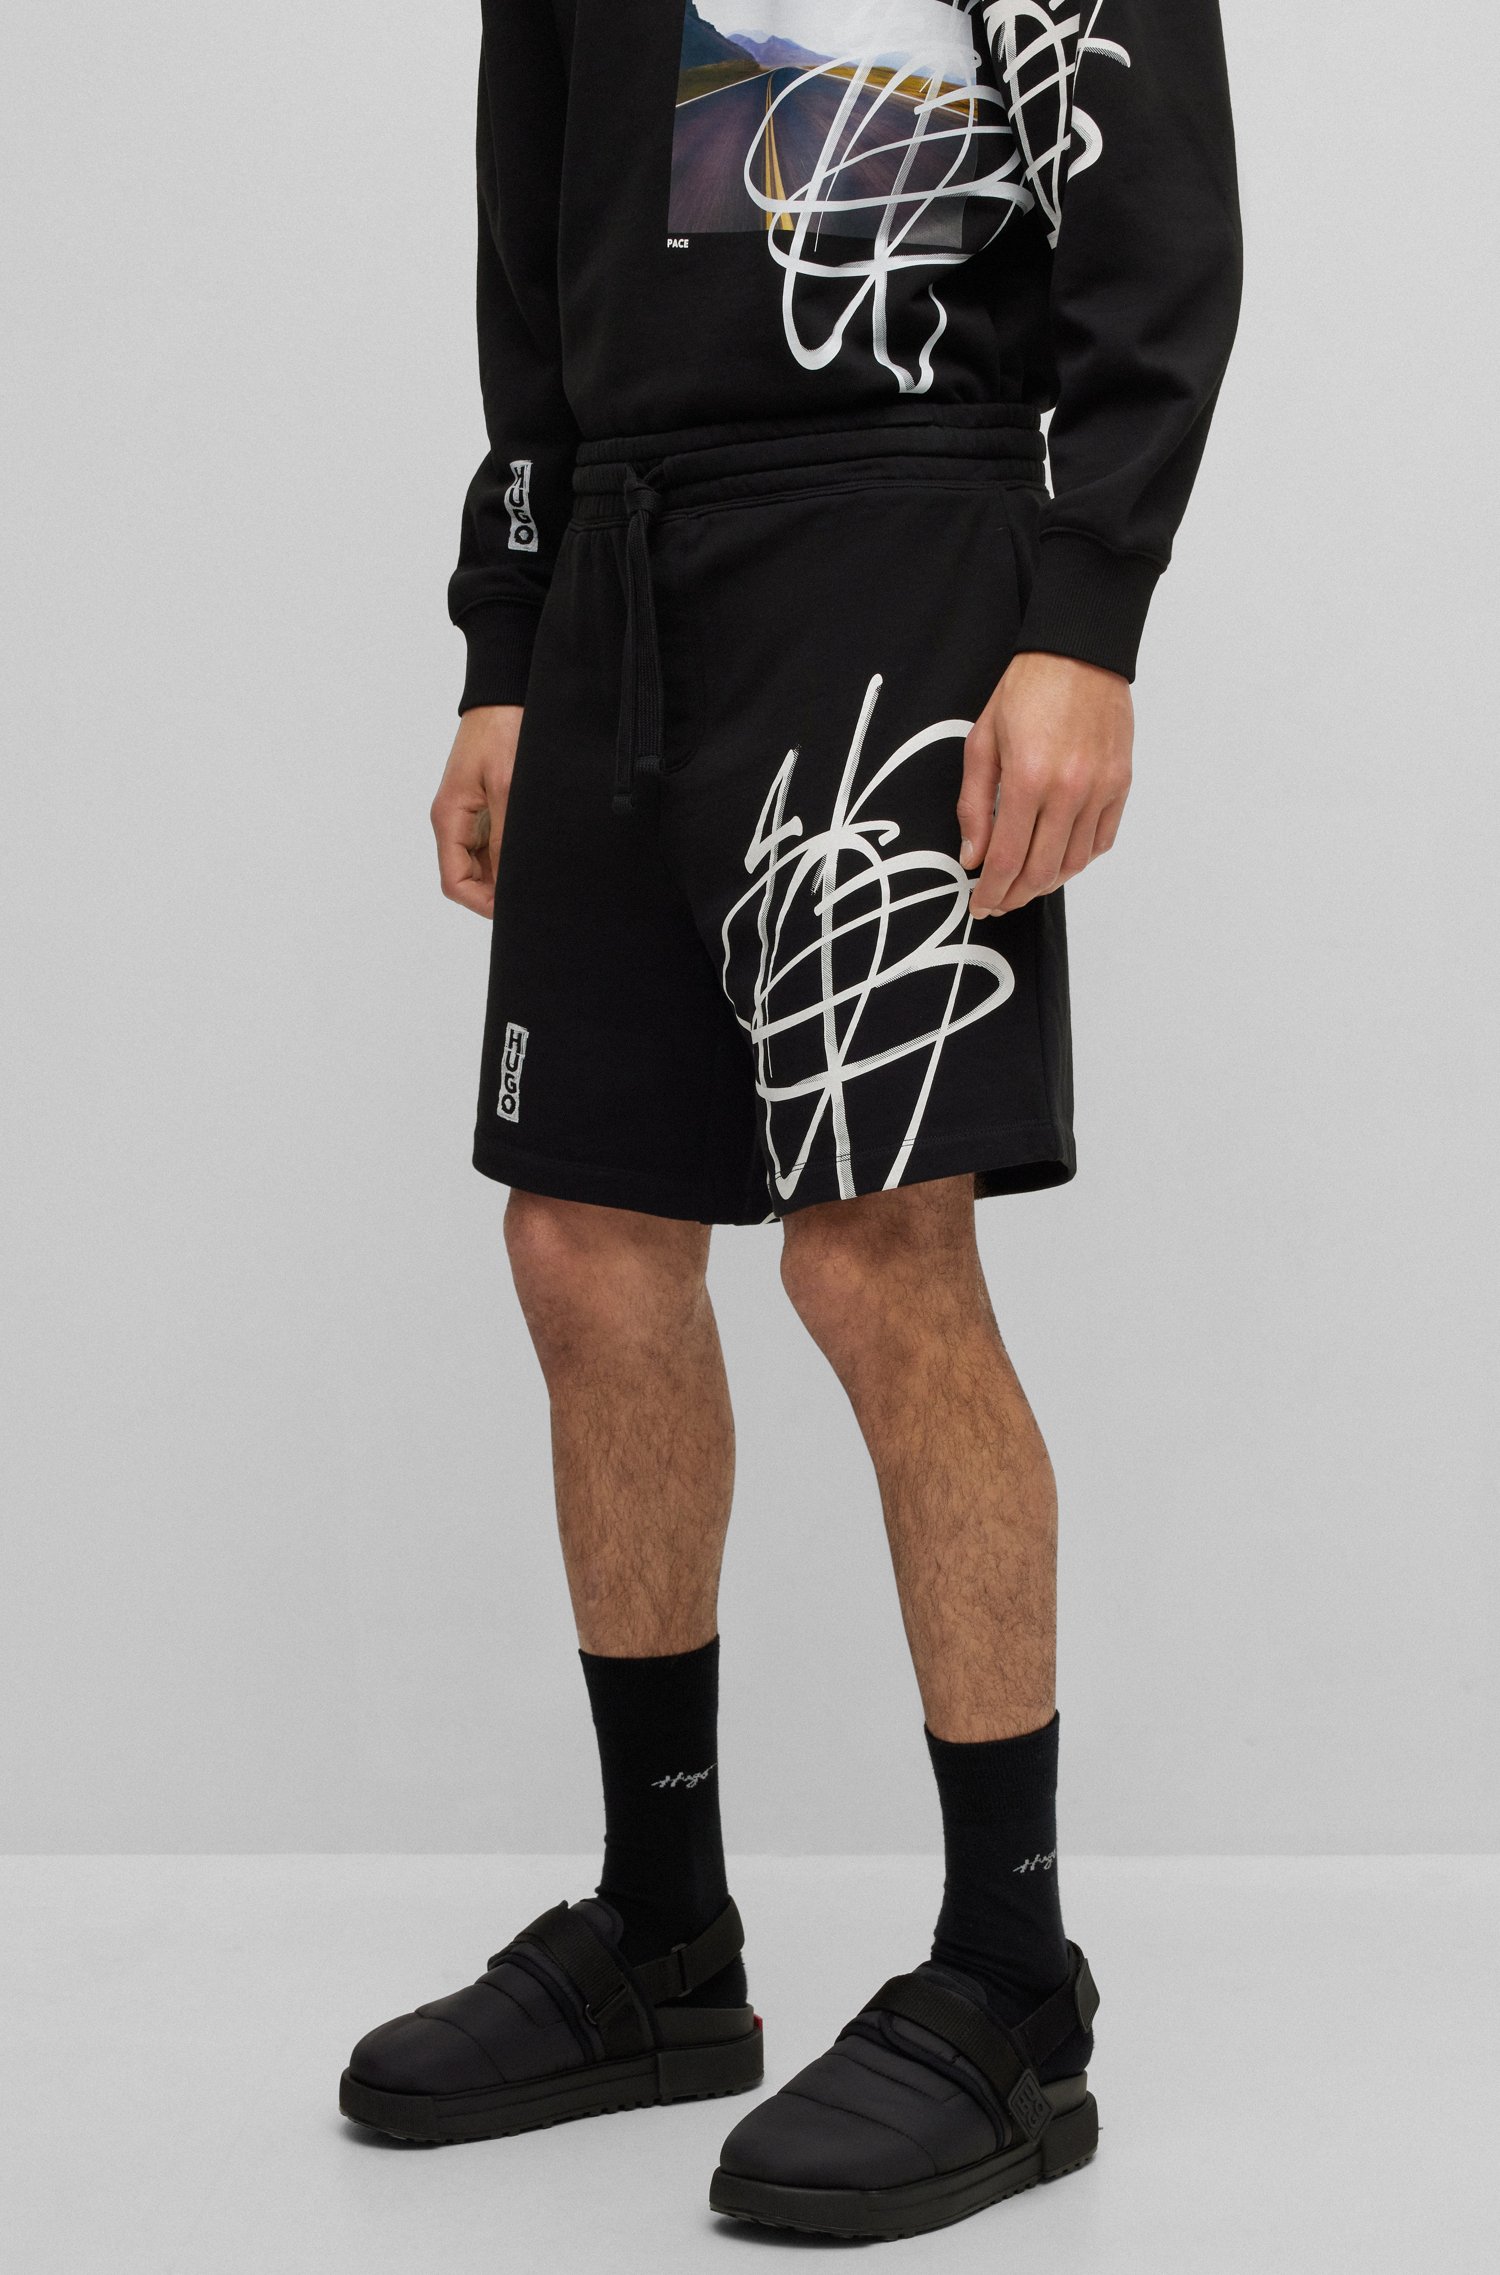 Shorts relaxed fit de algodón con etiqueta logo inspirado en los grafiti